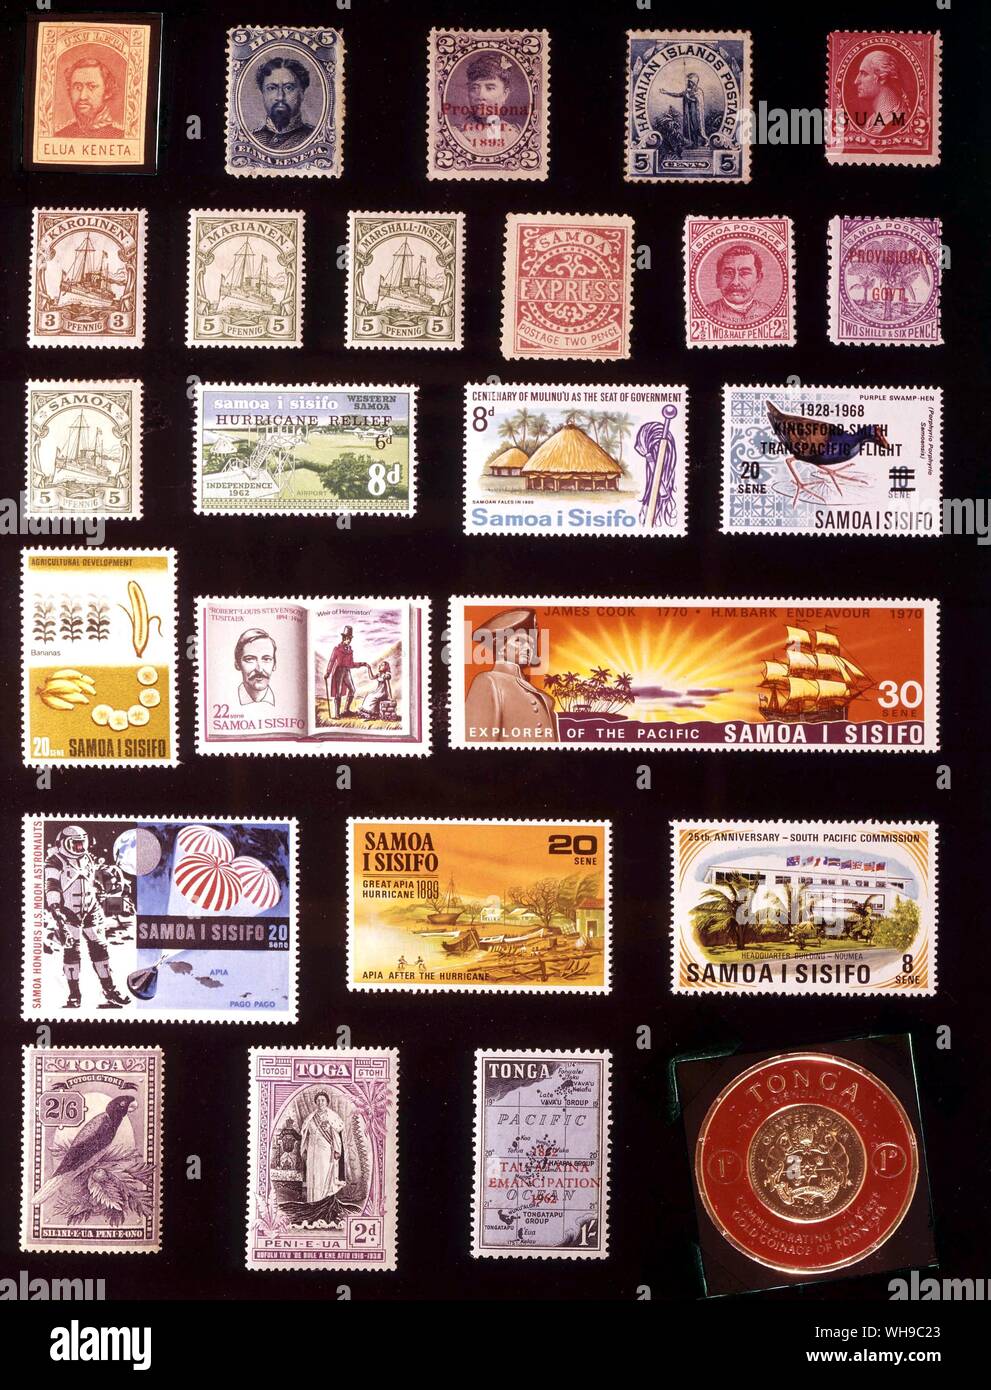 AUSTRALIA AND POLYNESIA - PACIFIC ISLANDS: (left to right) 1. Hawaii, 2 cents, 1862, 2. Hawaii, 5 cents, 1866, 3. Hawaii, 2 cents, 1893, 4. Hawaii, 5 cents, 1899, 5. Guam, 2 cents, 1899, 6. Caroline Islands, 3 pfennigs, 1901, 7. Mariana Islands, 5 pfennigs, 1901, 8. Marshall Islands, 5 pfennigs, 1901, 9. Samoa, 2 pence, 1877, 10. Samoa, 2.5 pence, 1897, 11. Samoa, 2 shillings 6 pence, 1899, 12. Samoa, 5 pfennigs, 1901, 13. Samoa, 8 pence, 1966, 14. Samoa, 8 pence, 1967, 15. Samoa, 20 sene, 1968, 16. Samoa, 20 sene, 1968, 17. Samoa, 22 sene, 1969, 18. Samoa, 30 sene, 1970, 19. Samoa, 20 sene, Stock Photo